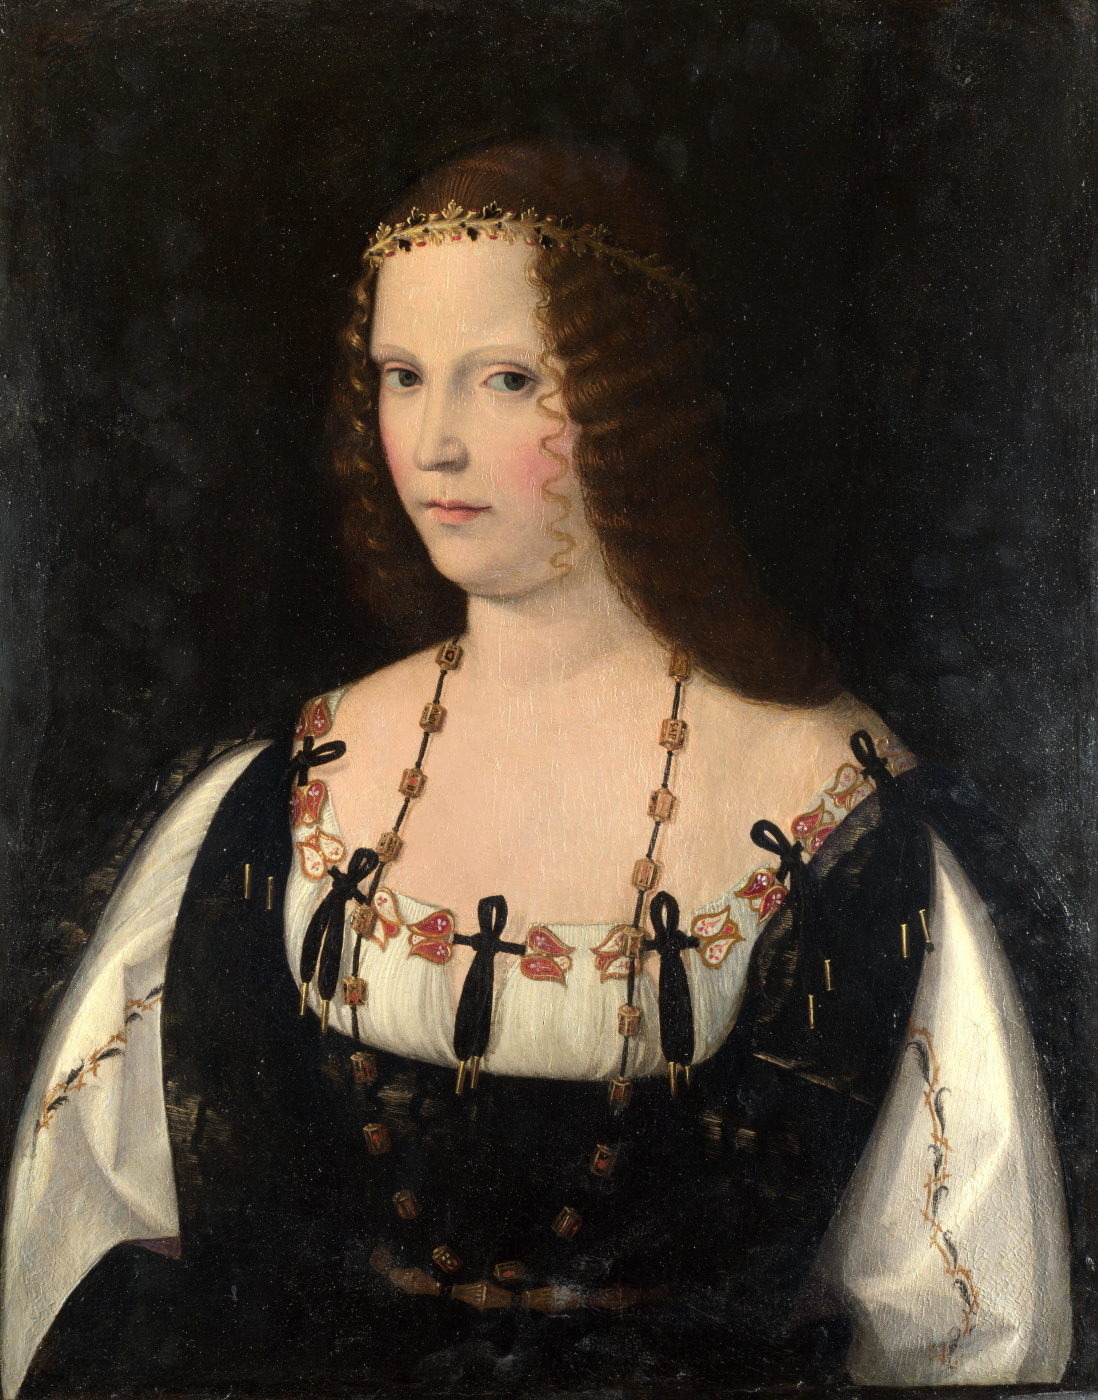 Veneto Bartolomeo. Portrait of a young lady